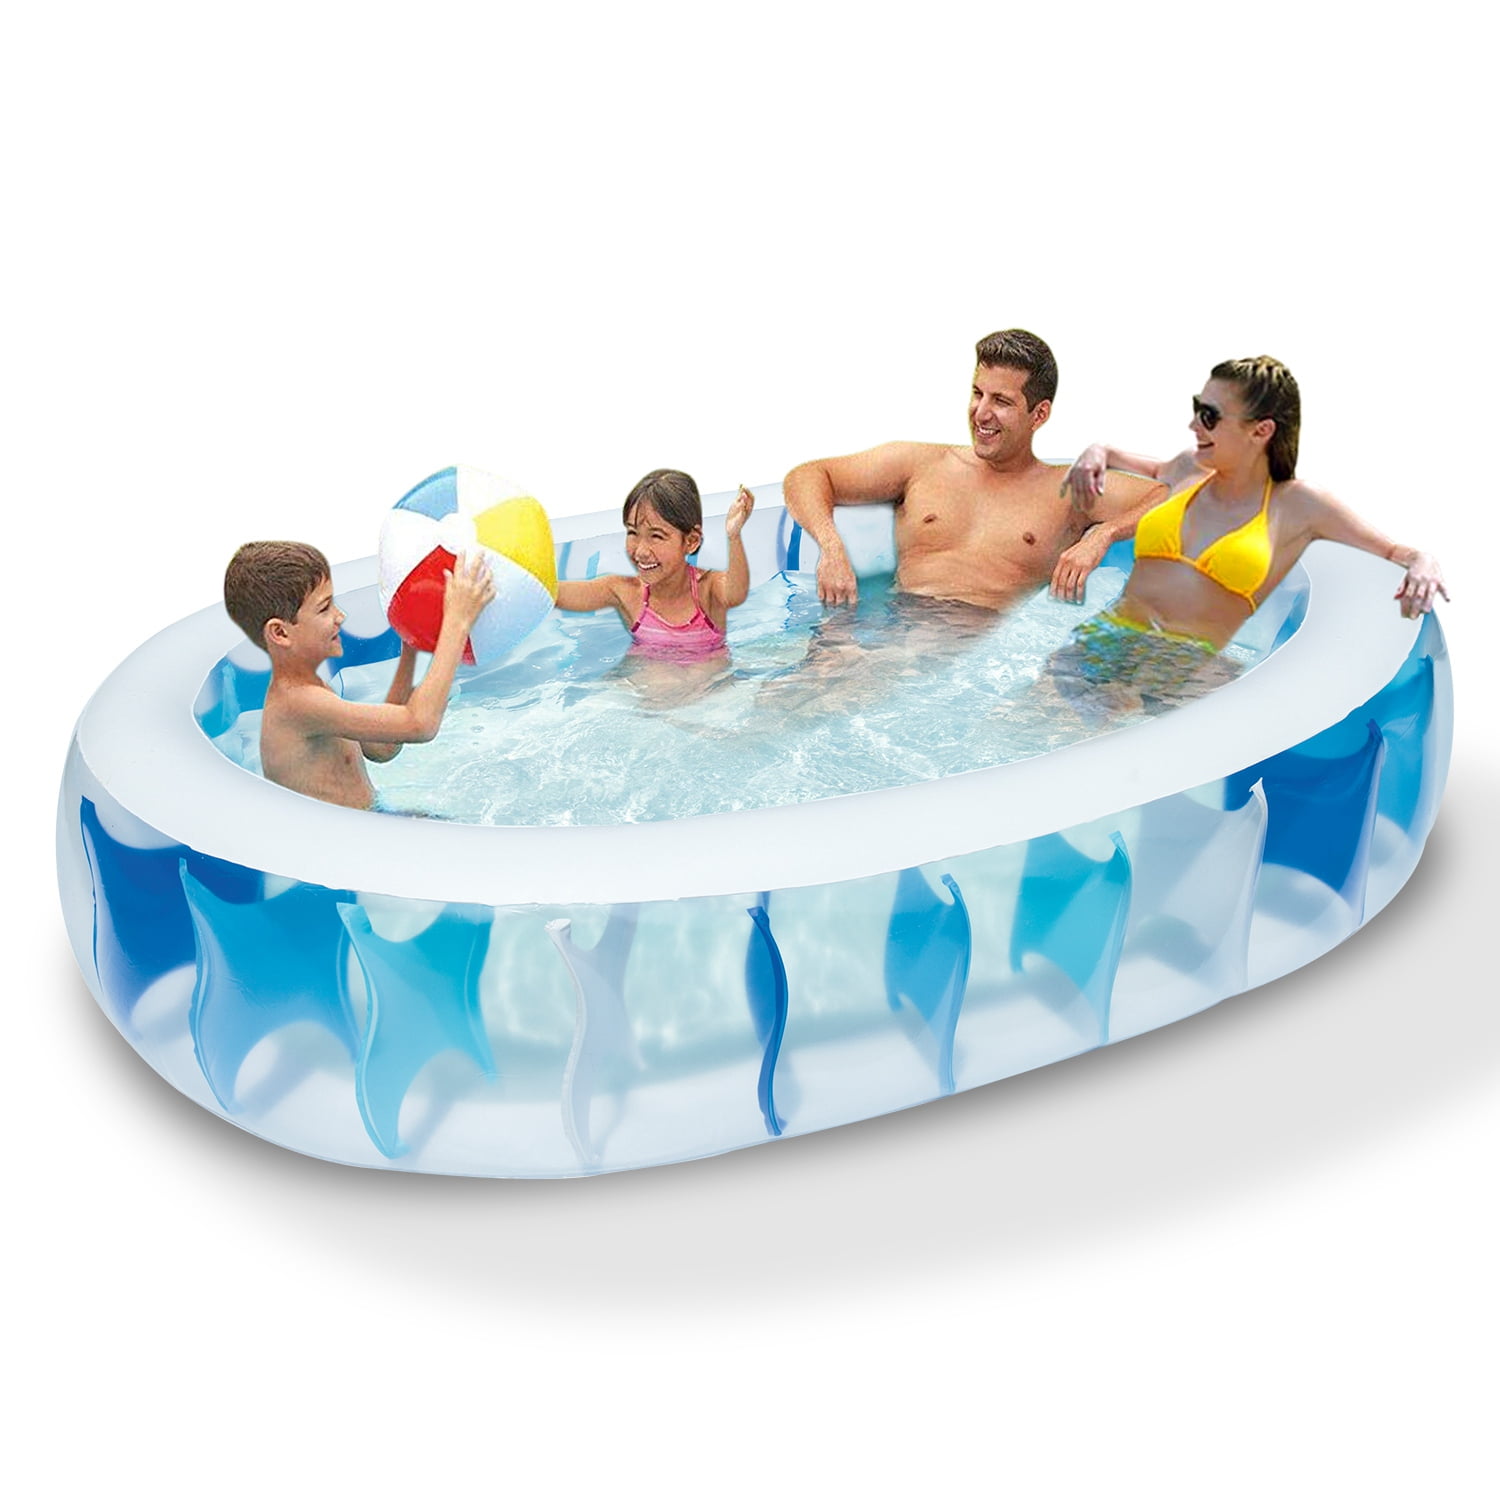 58" Intex Rainbow Spray Pool Kids Inflatable Paddling Pool Summer Garden Fun Toy 